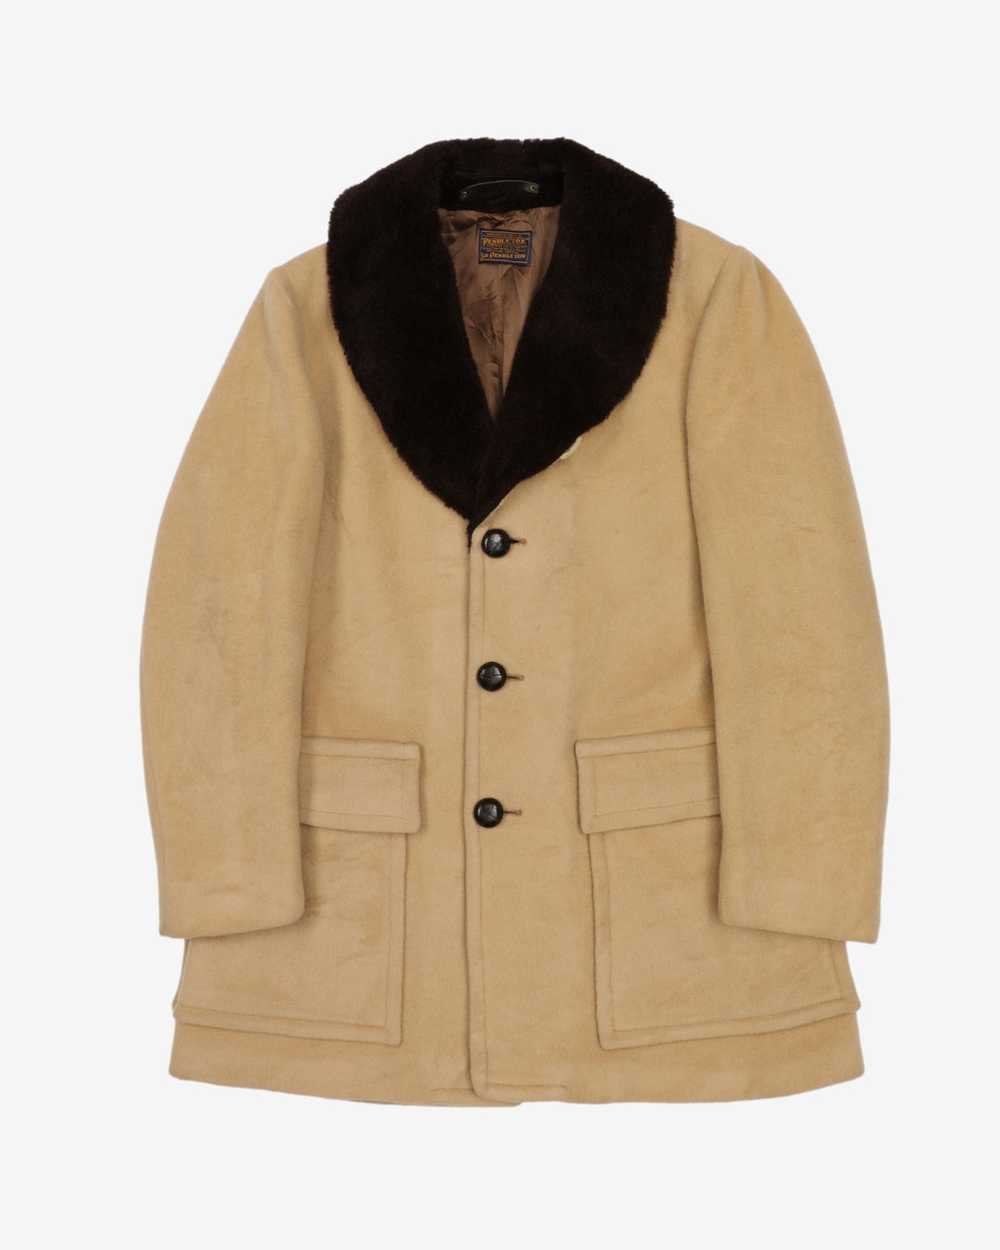 Pendleton Beige Wool Jacket Overcoat - M / L - image 1